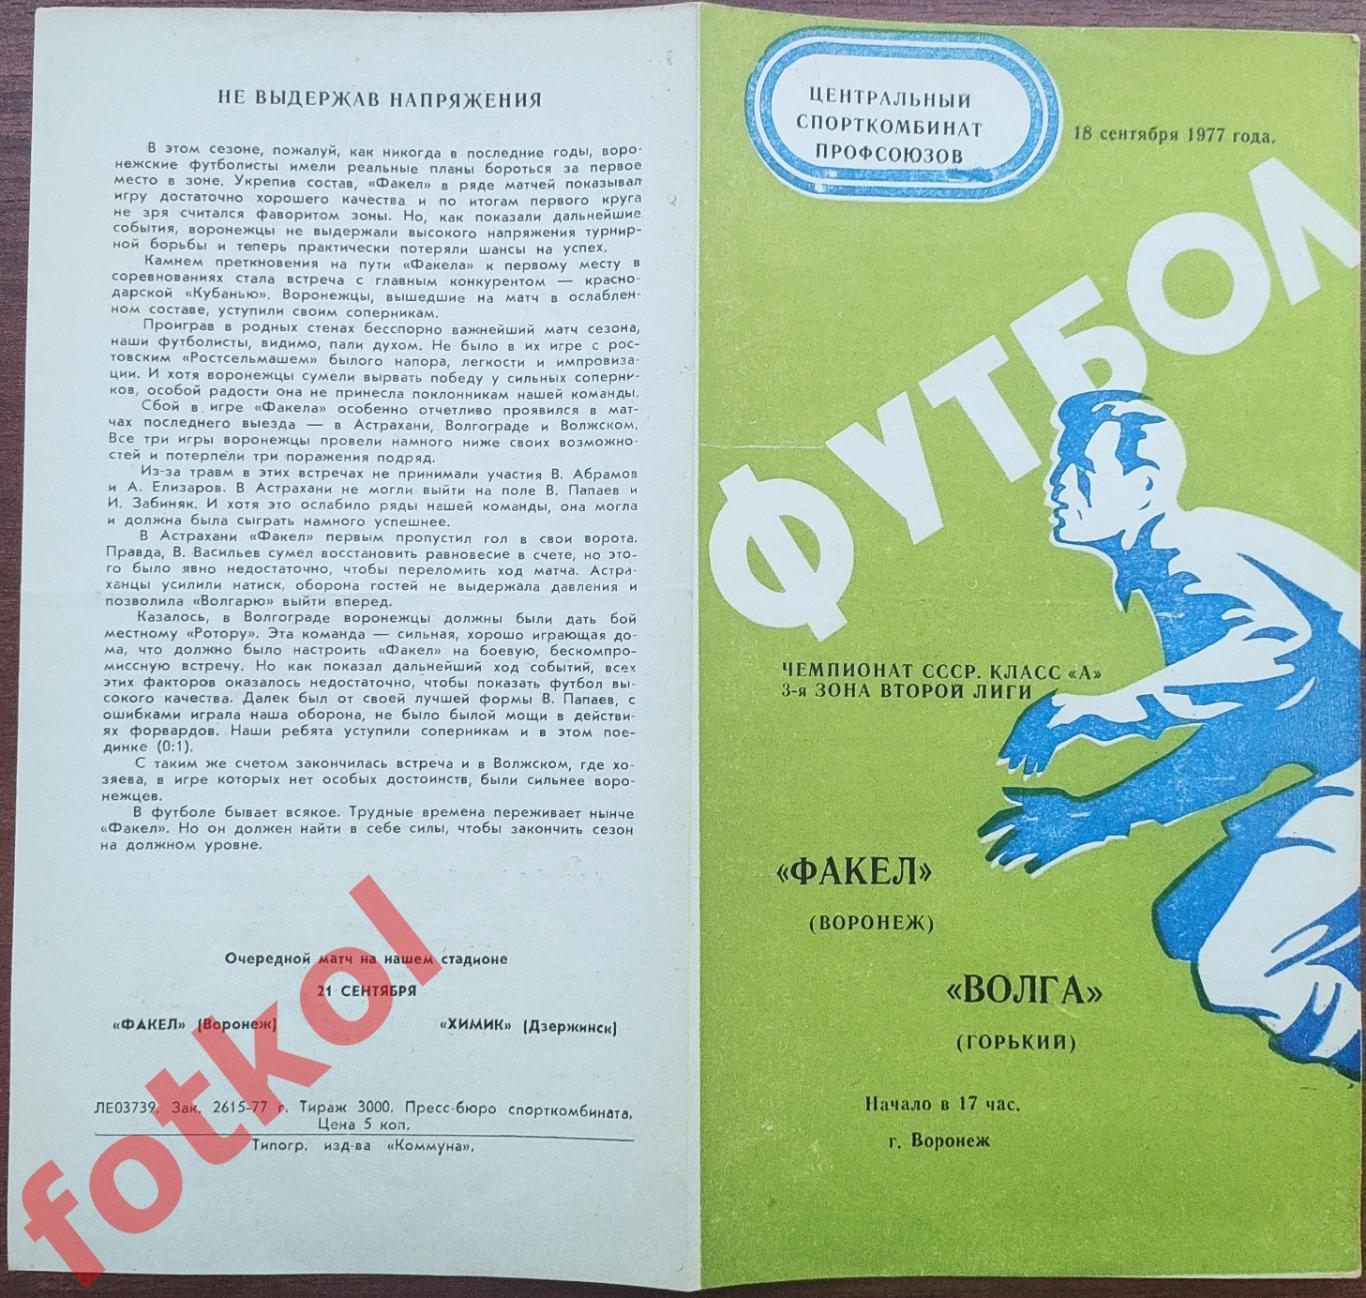 ТРУД Воронеж - ВОЛГА Горький/Нижний Новгород 18.09.1977